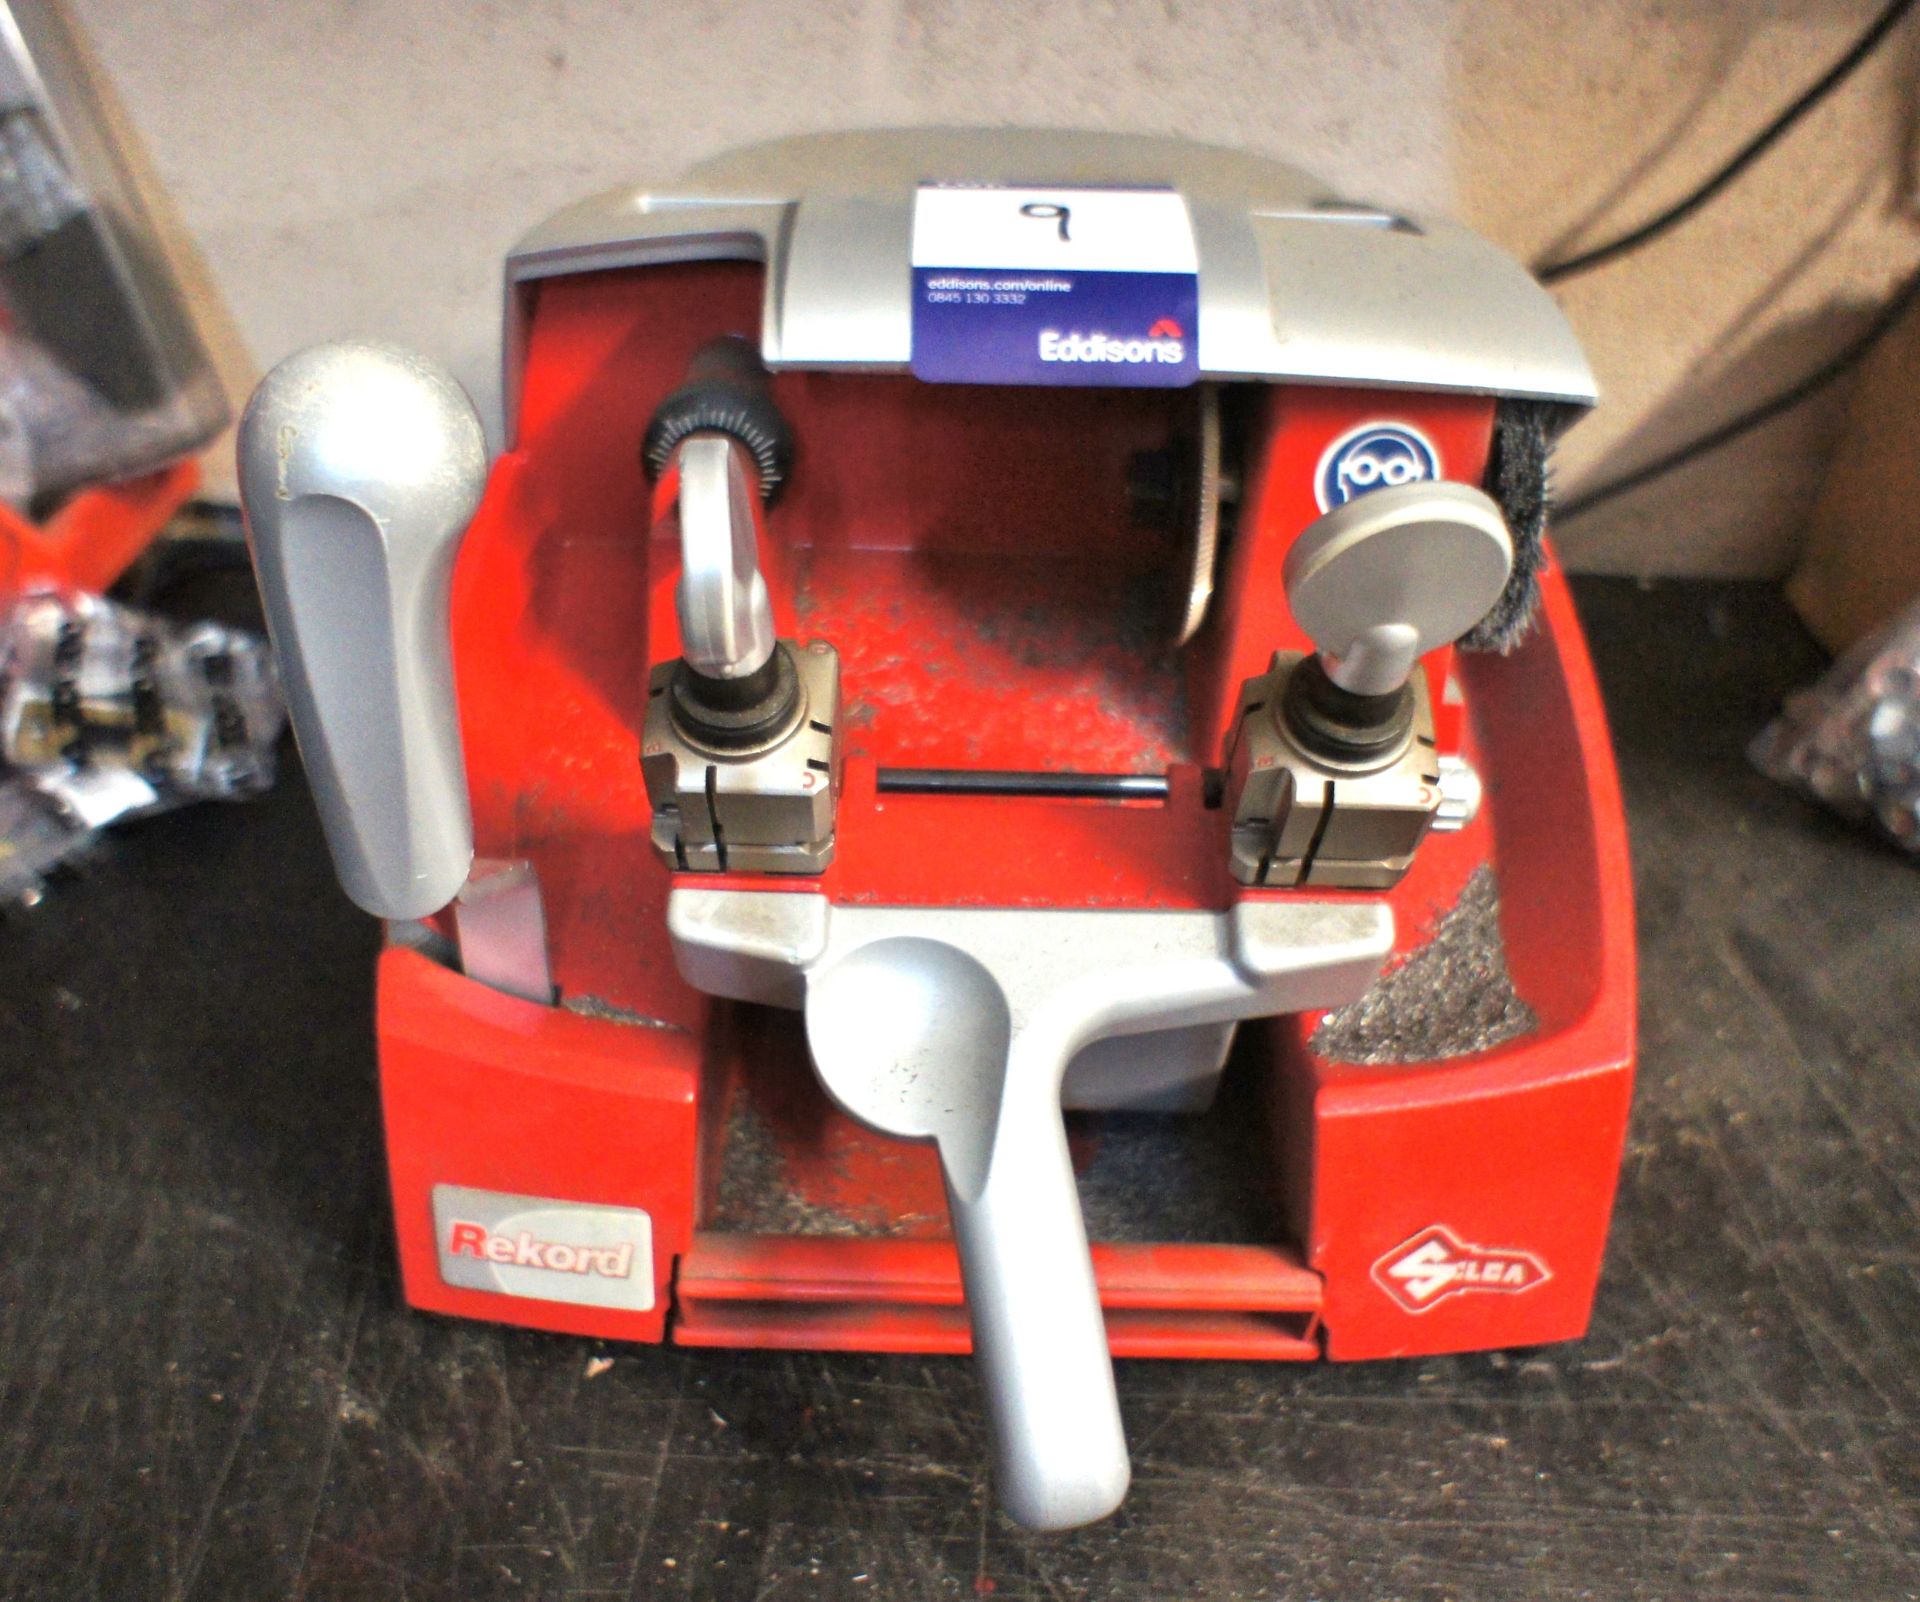 Silca Rekord Key Cutting Machine, 240v - Image 4 of 4